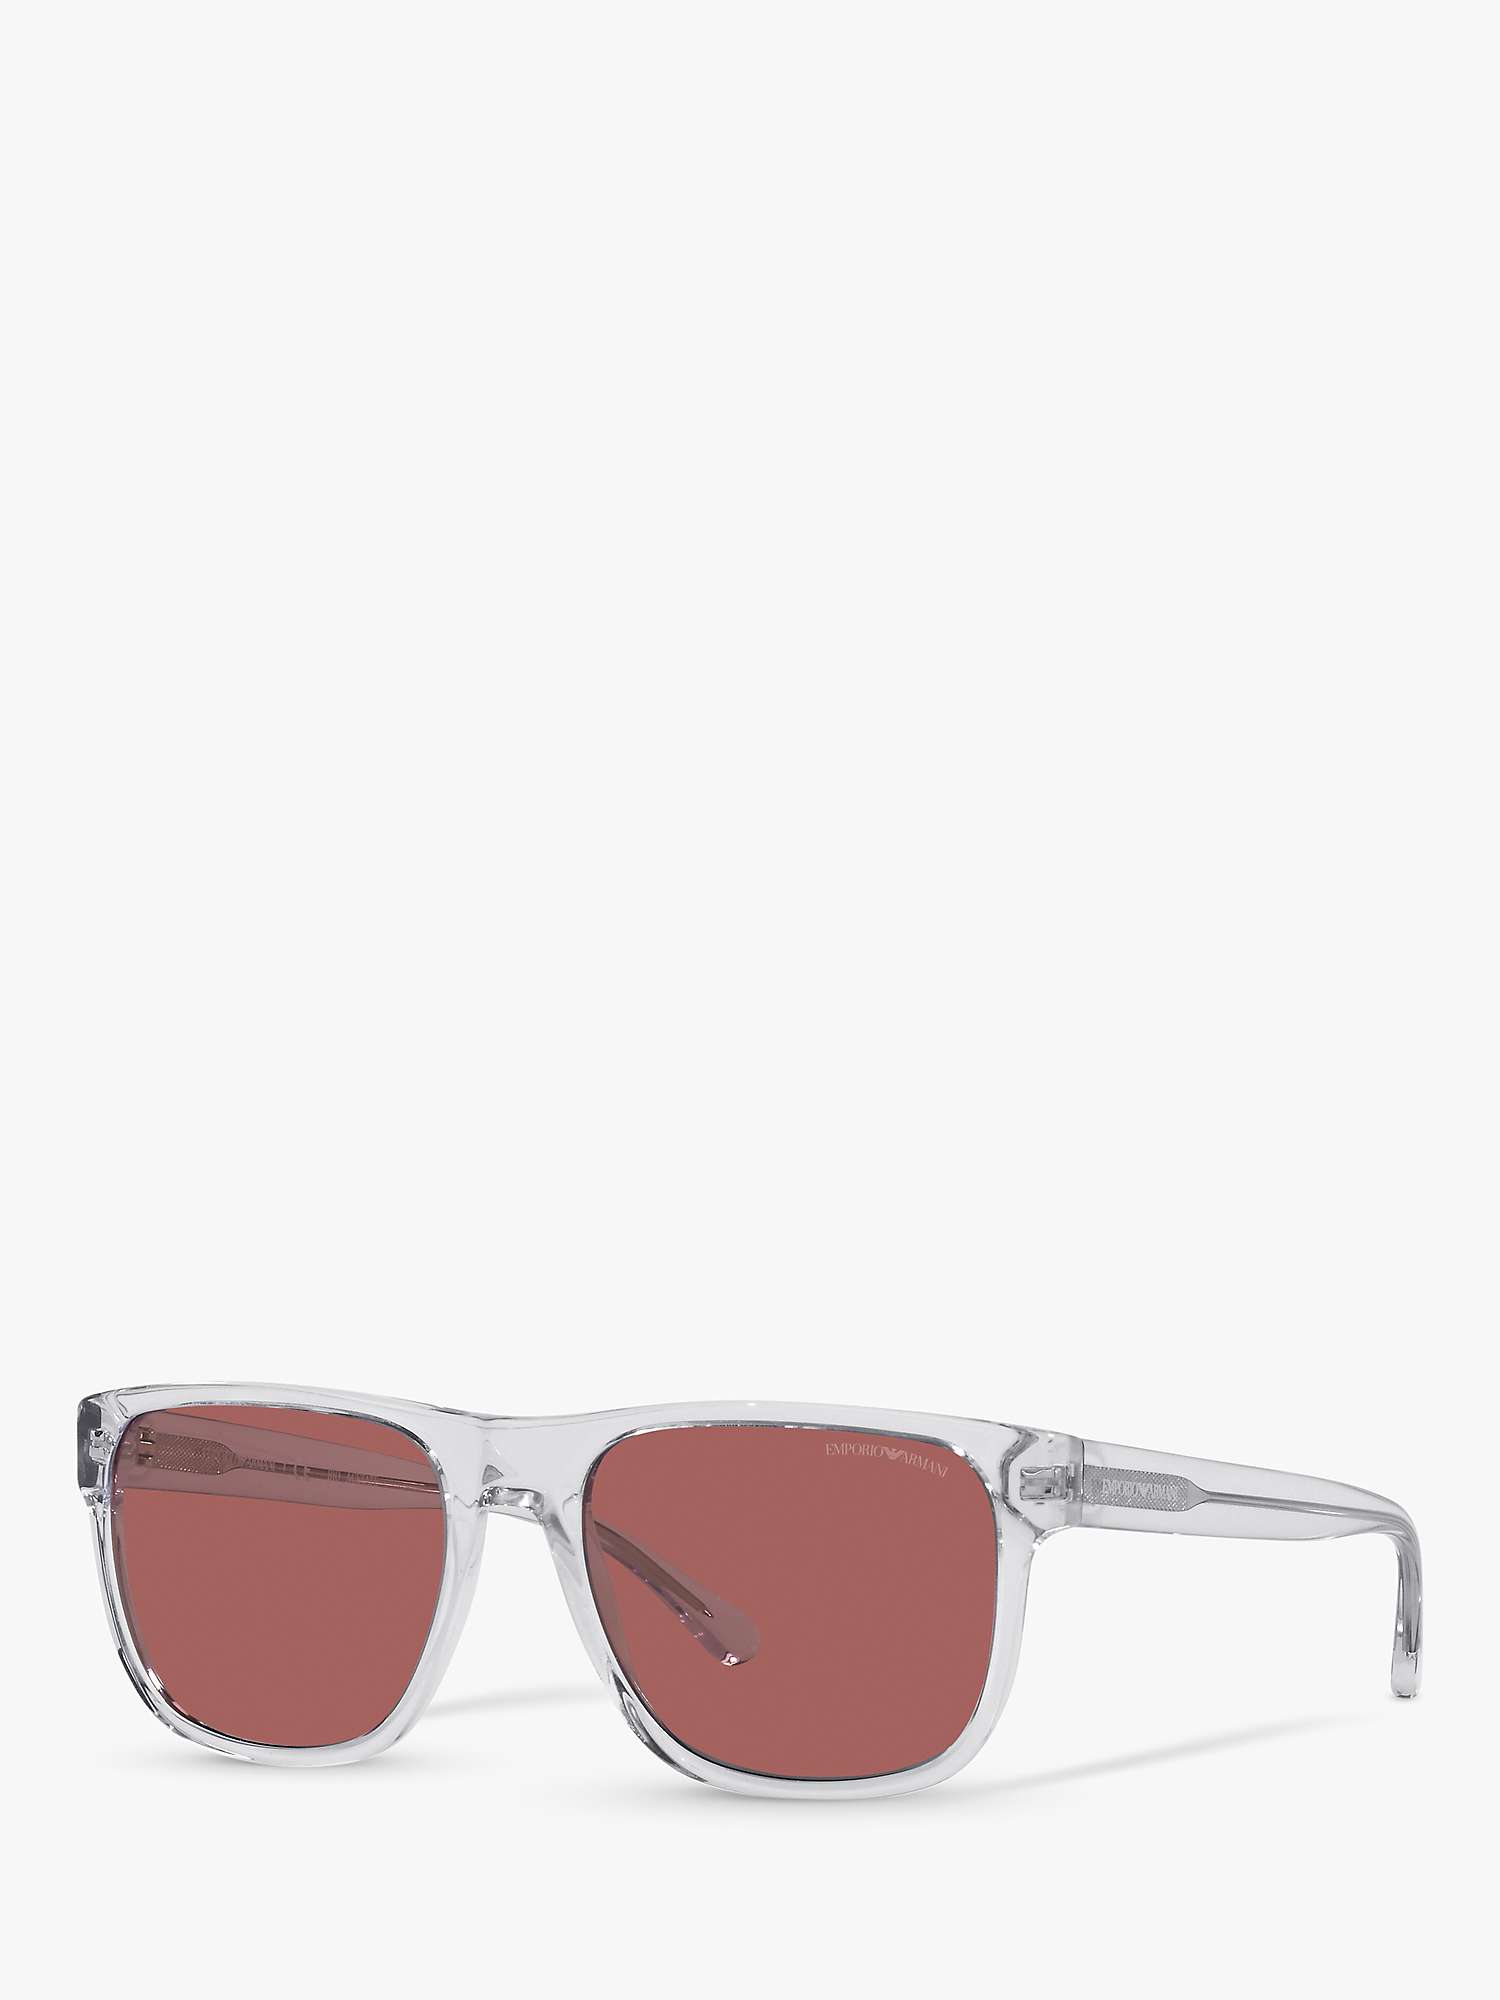 Buy Emporio Armani EA4163 Men's Square Sunglasses, Clear/Pink Online at johnlewis.com